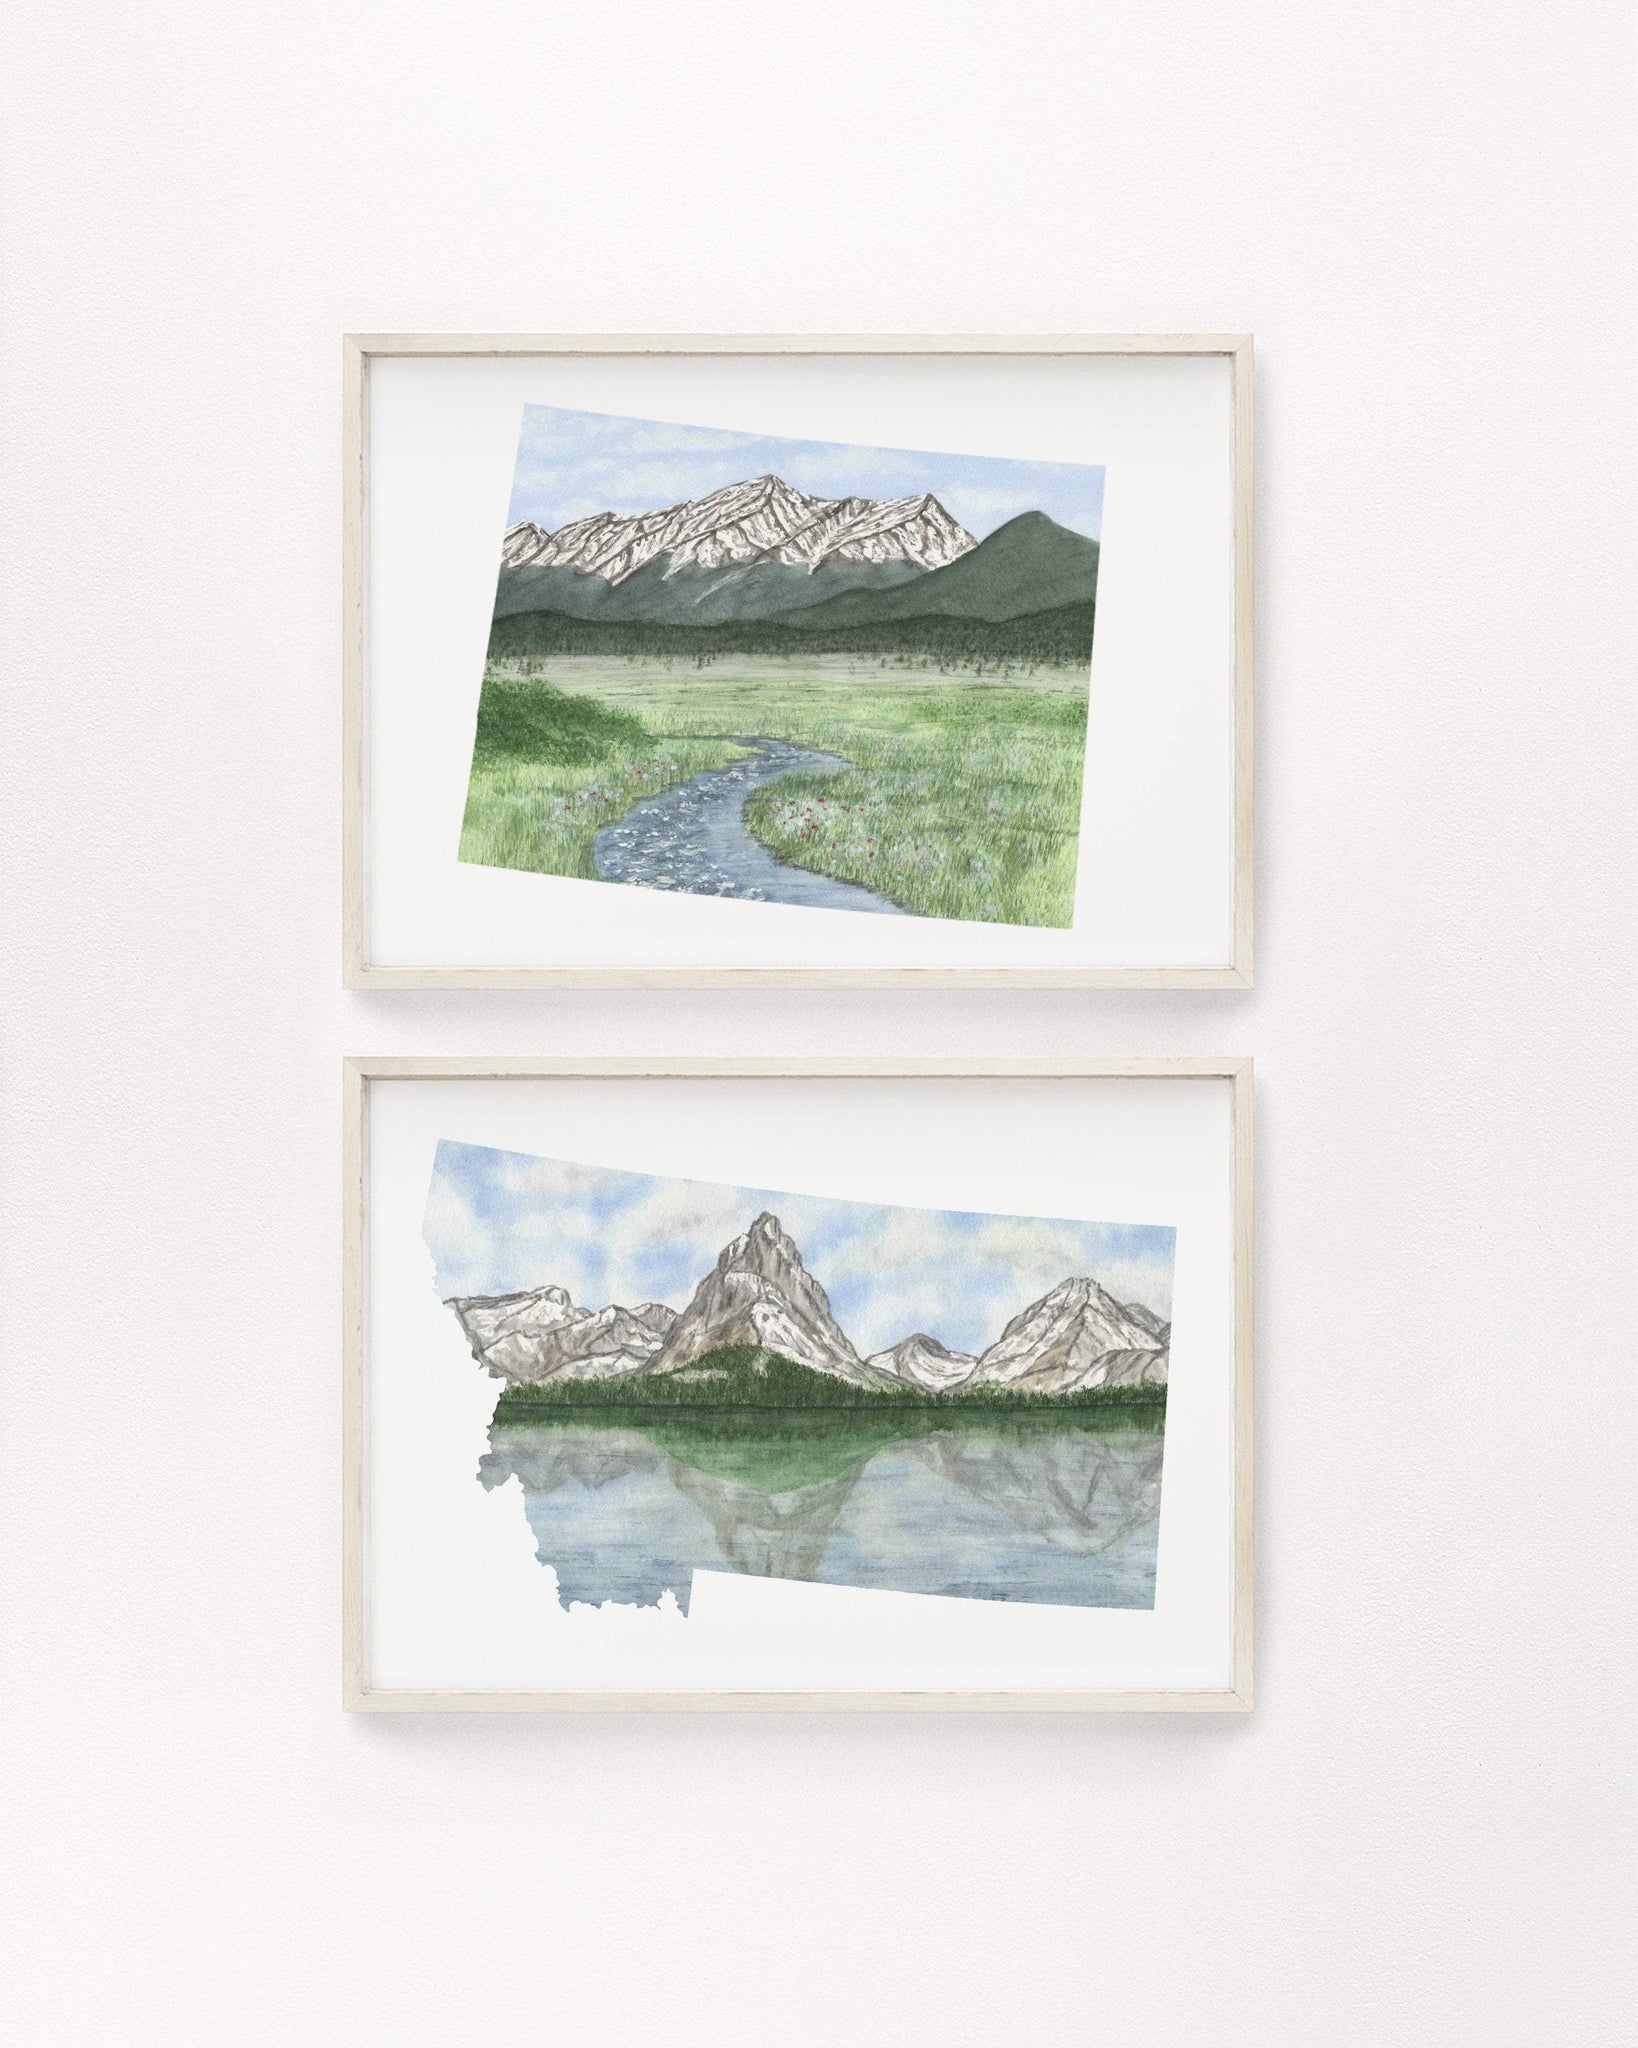 Rocky Mountain National Park Watercolor Canvas Print – Horsetooth'd